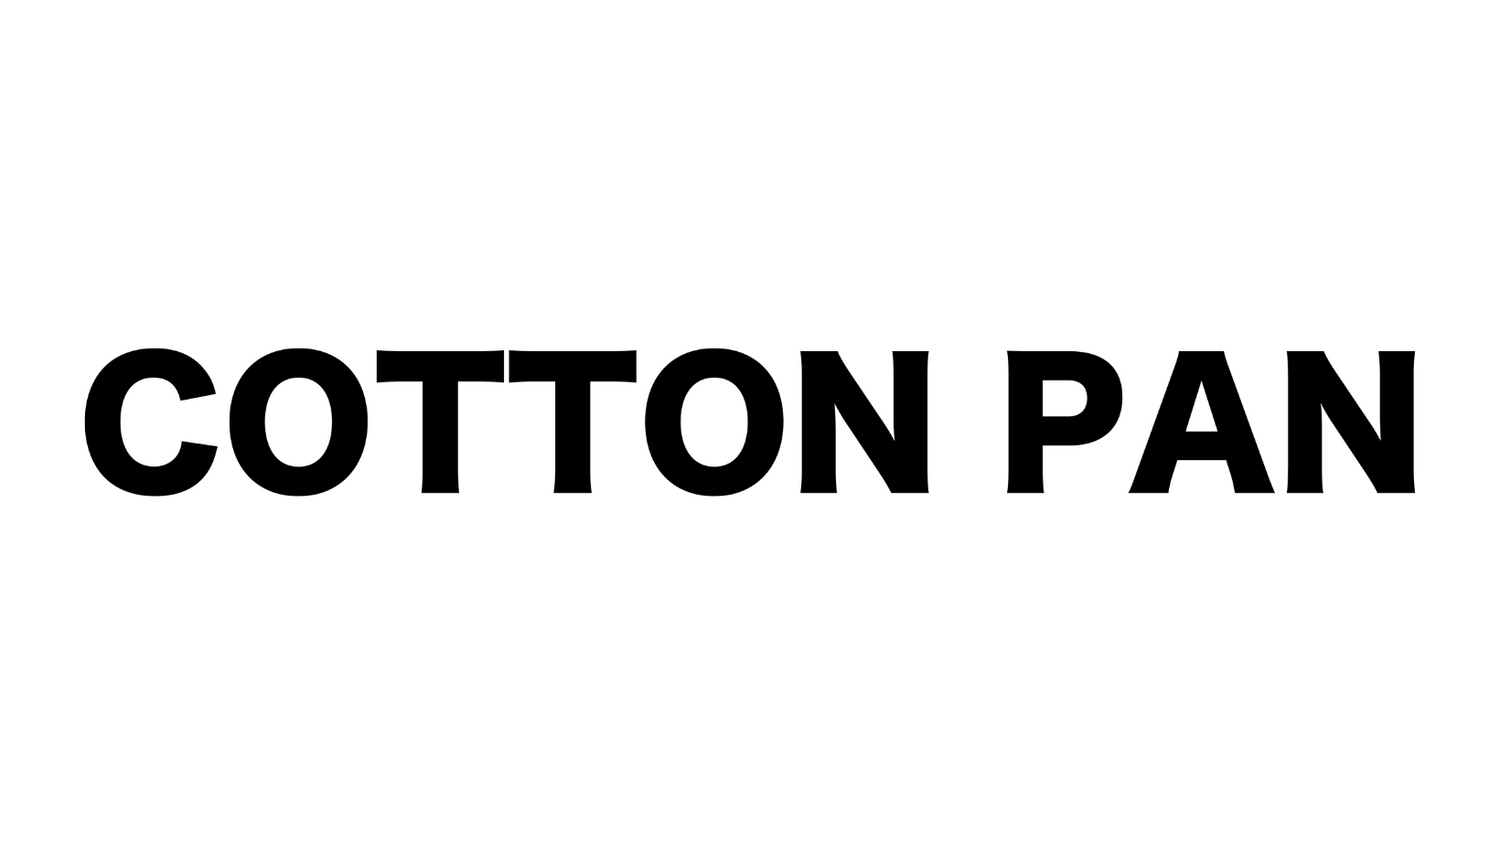 COTTON PAN